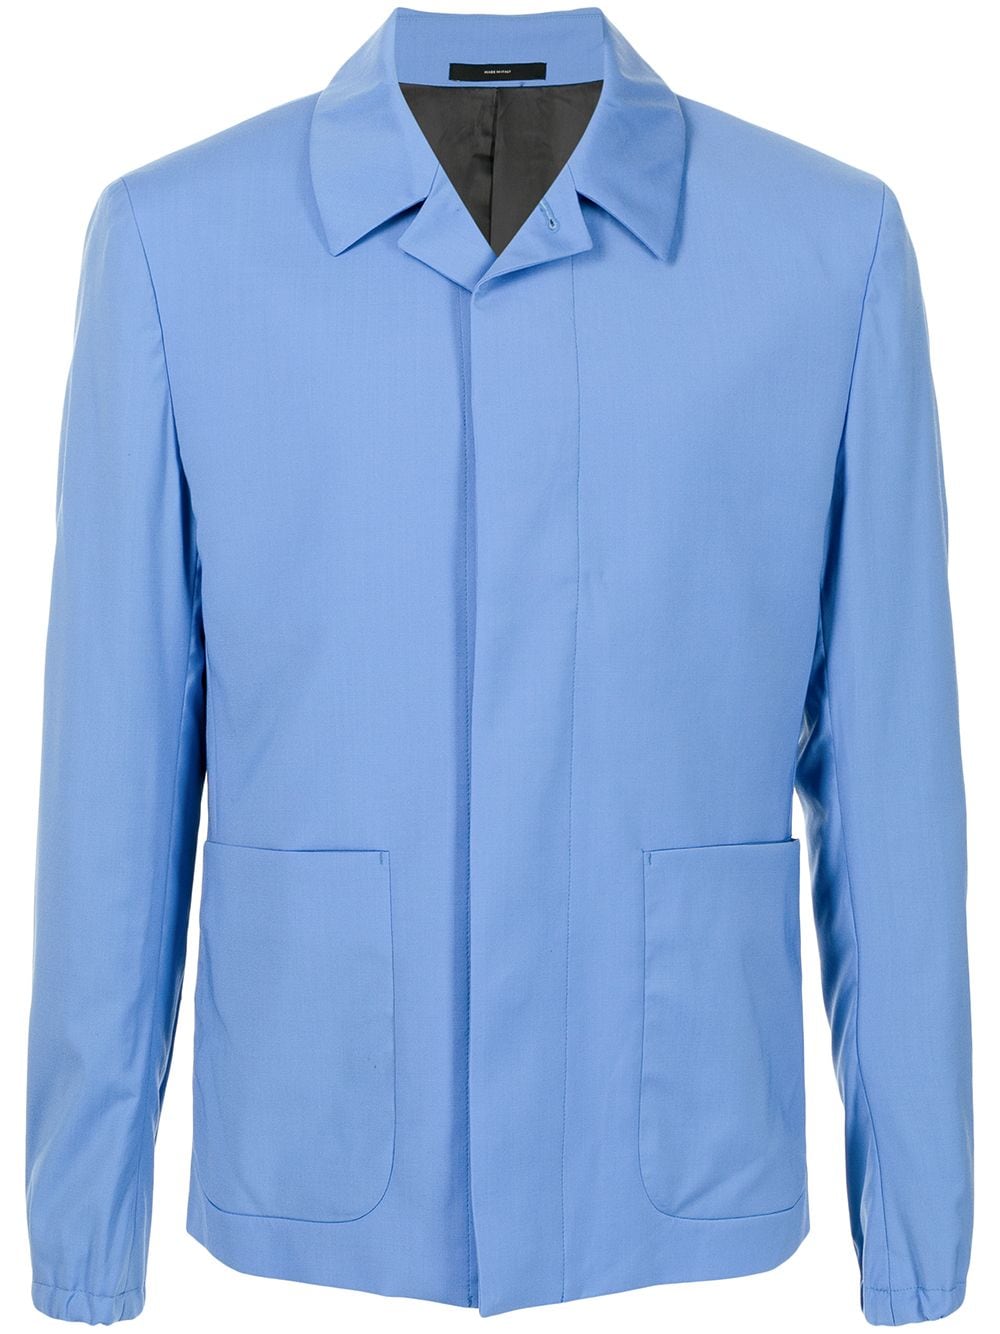 Paul Smith wool shirt jacket - Blue von Paul Smith